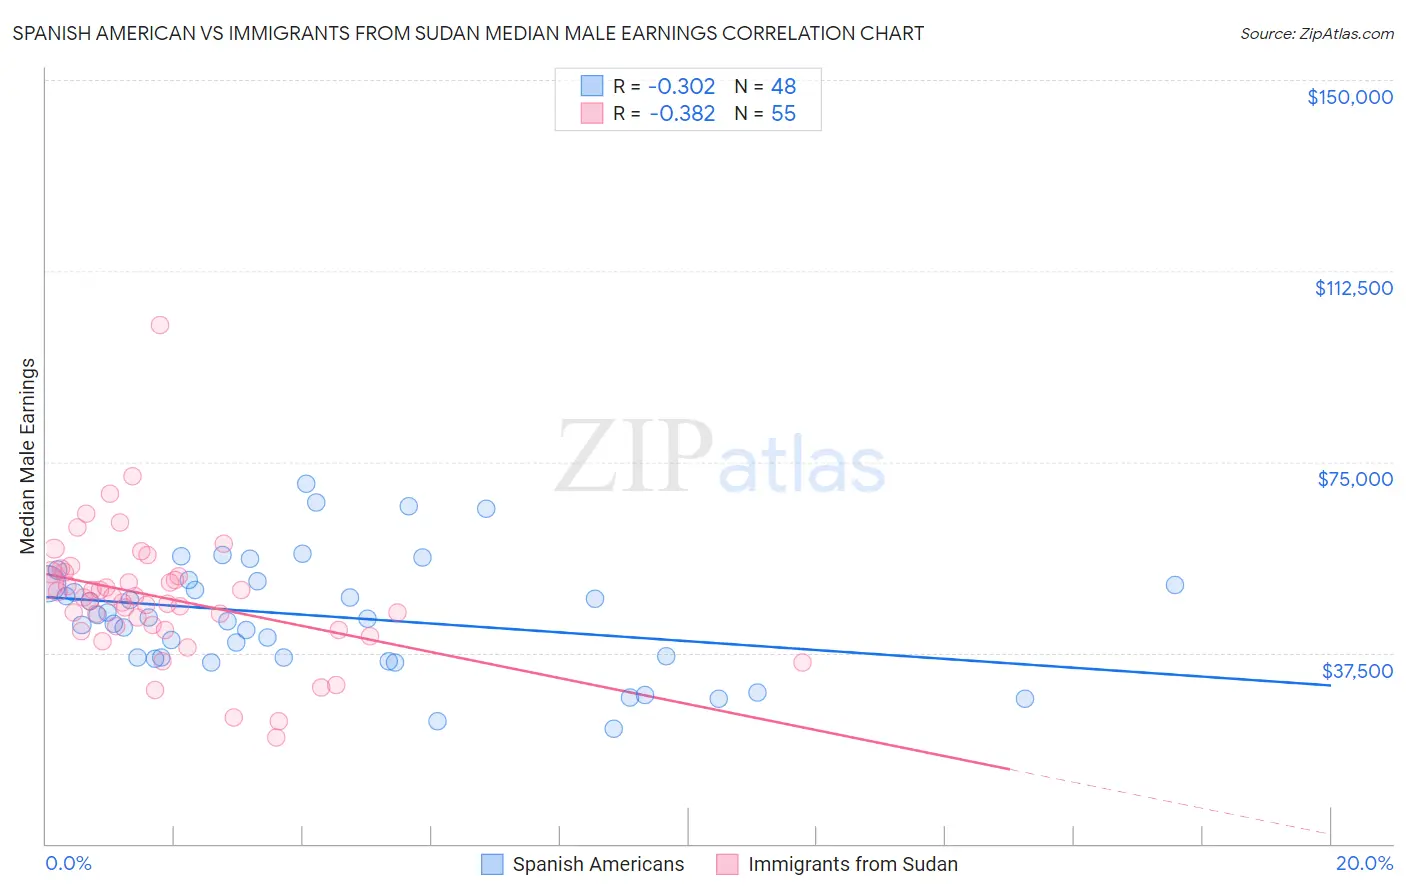 Spanish American vs Immigrants from Sudan Median Male Earnings